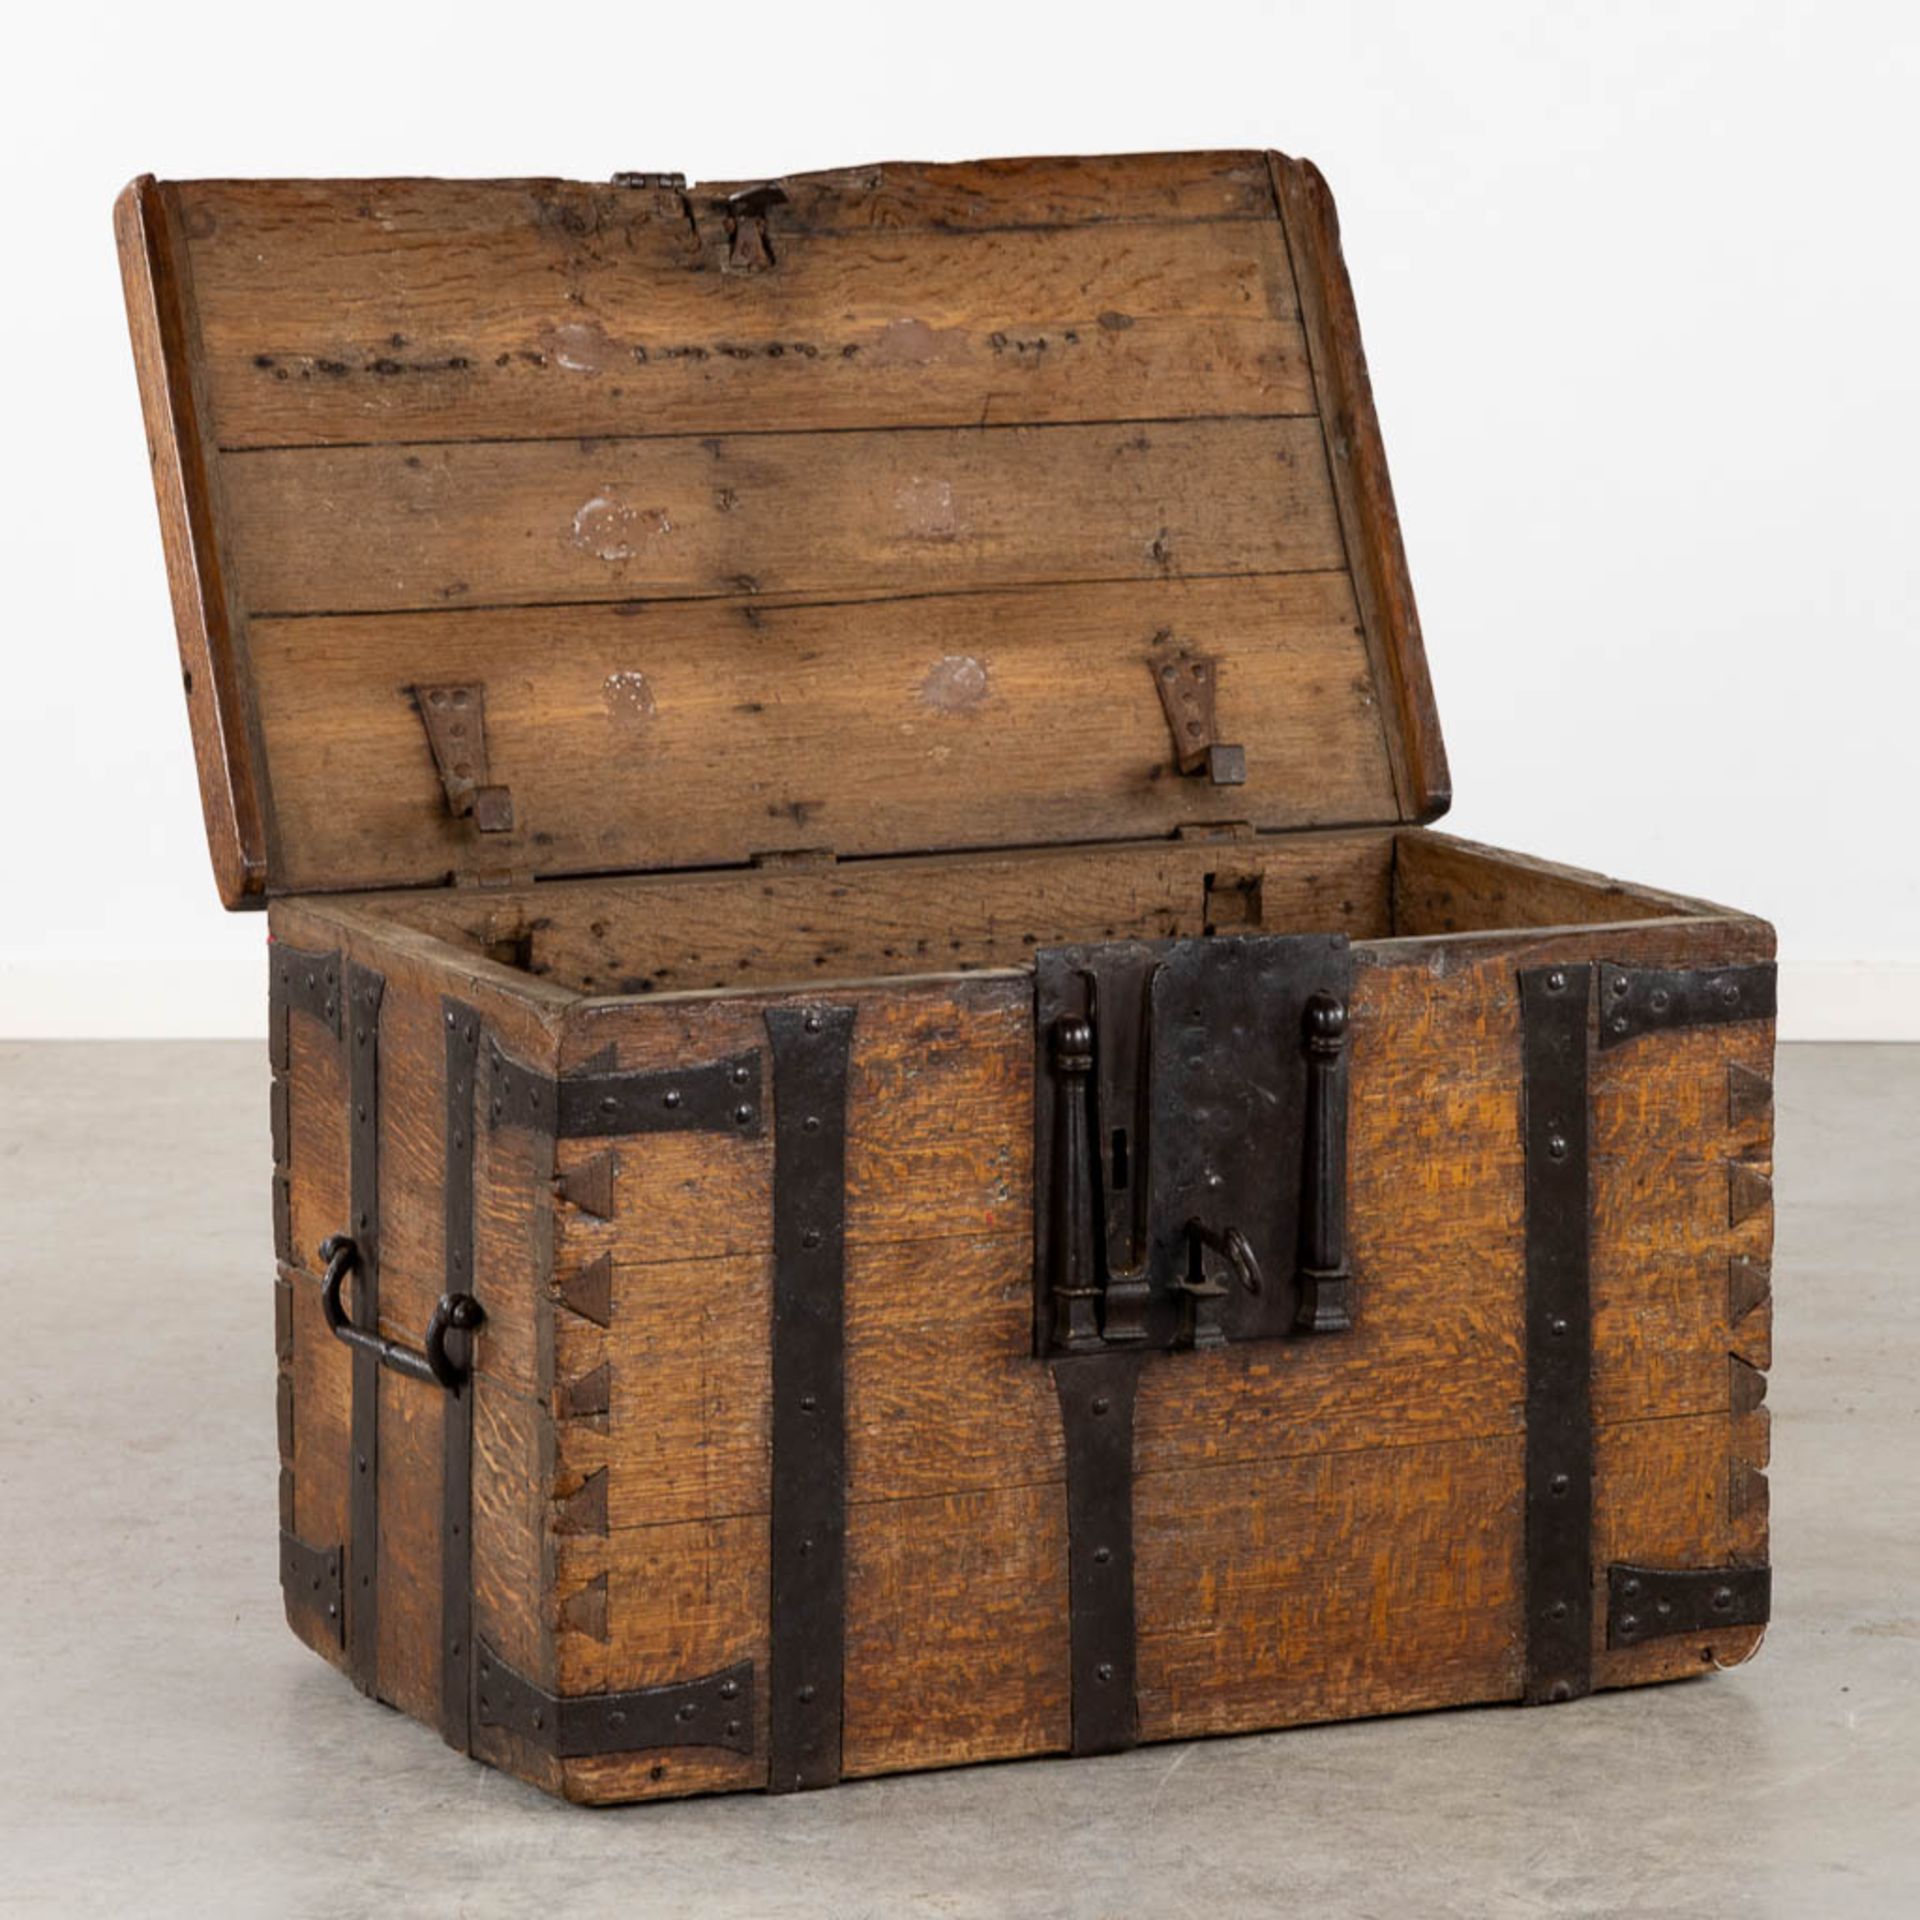 An antique Money box, wood mounted with wrought iron, circa 1500. (L:77 x W:44 x H:50 cm) - Bild 3 aus 14